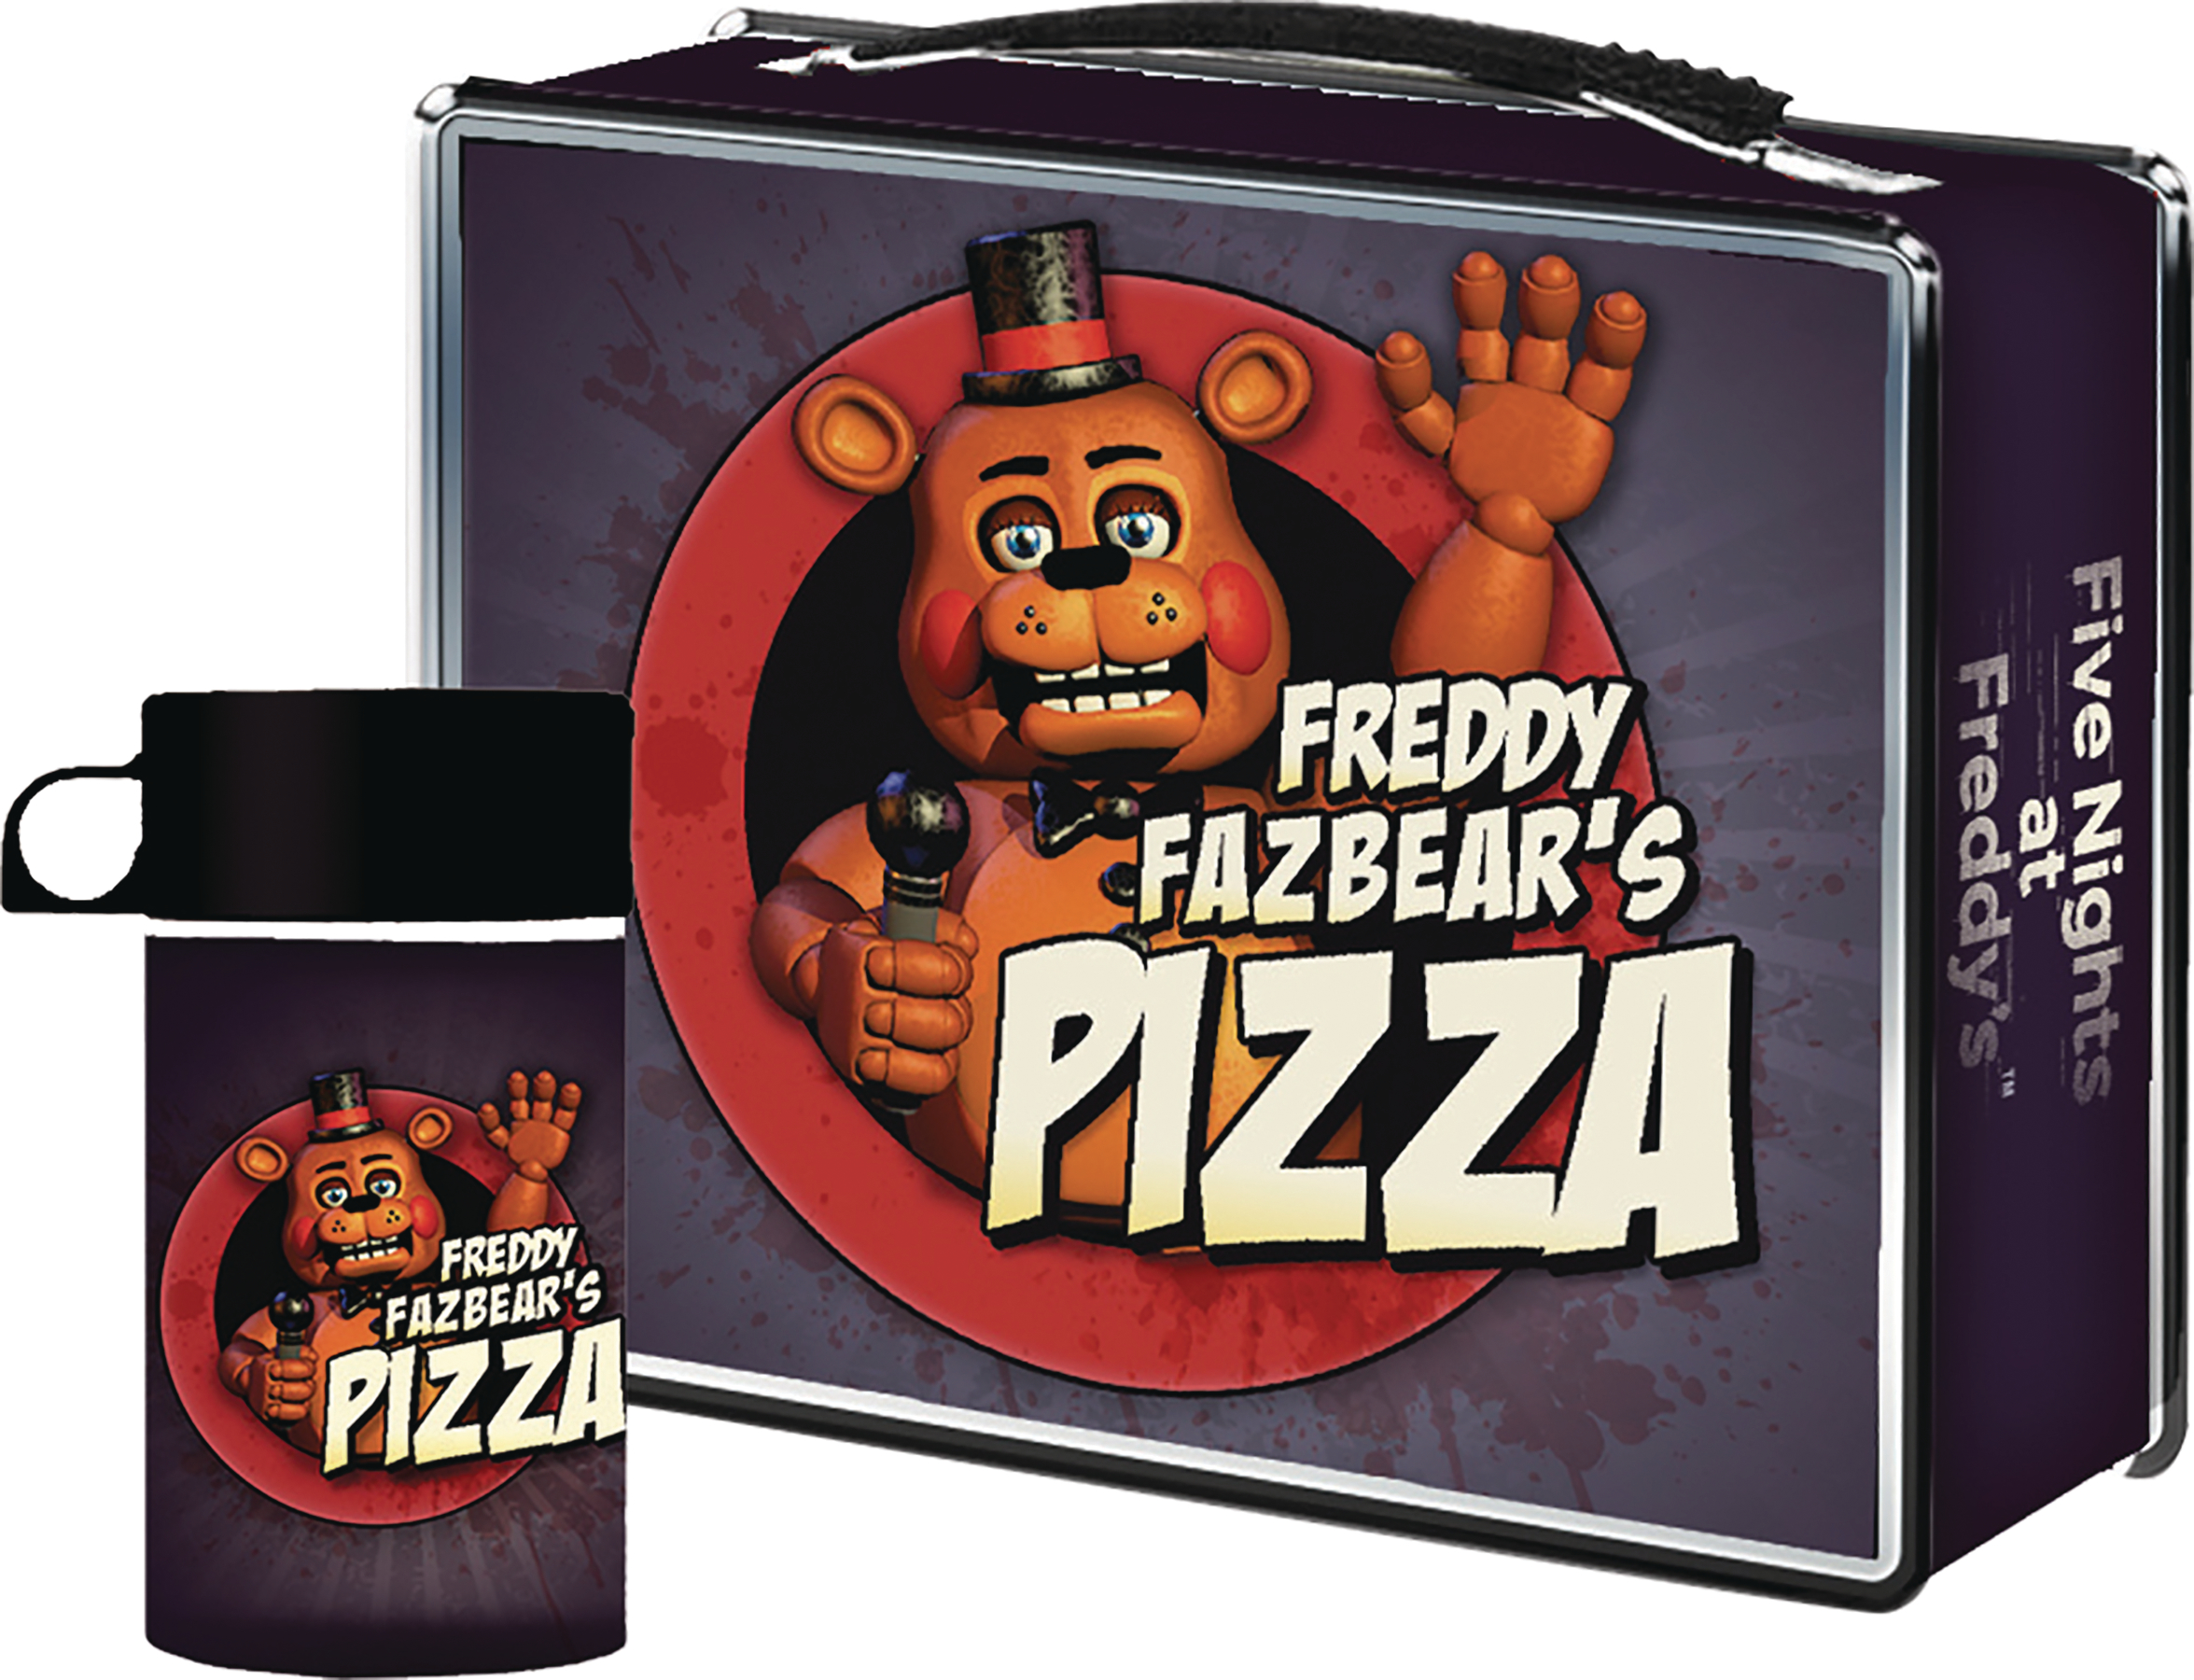 Box Five Nights at Freddy's